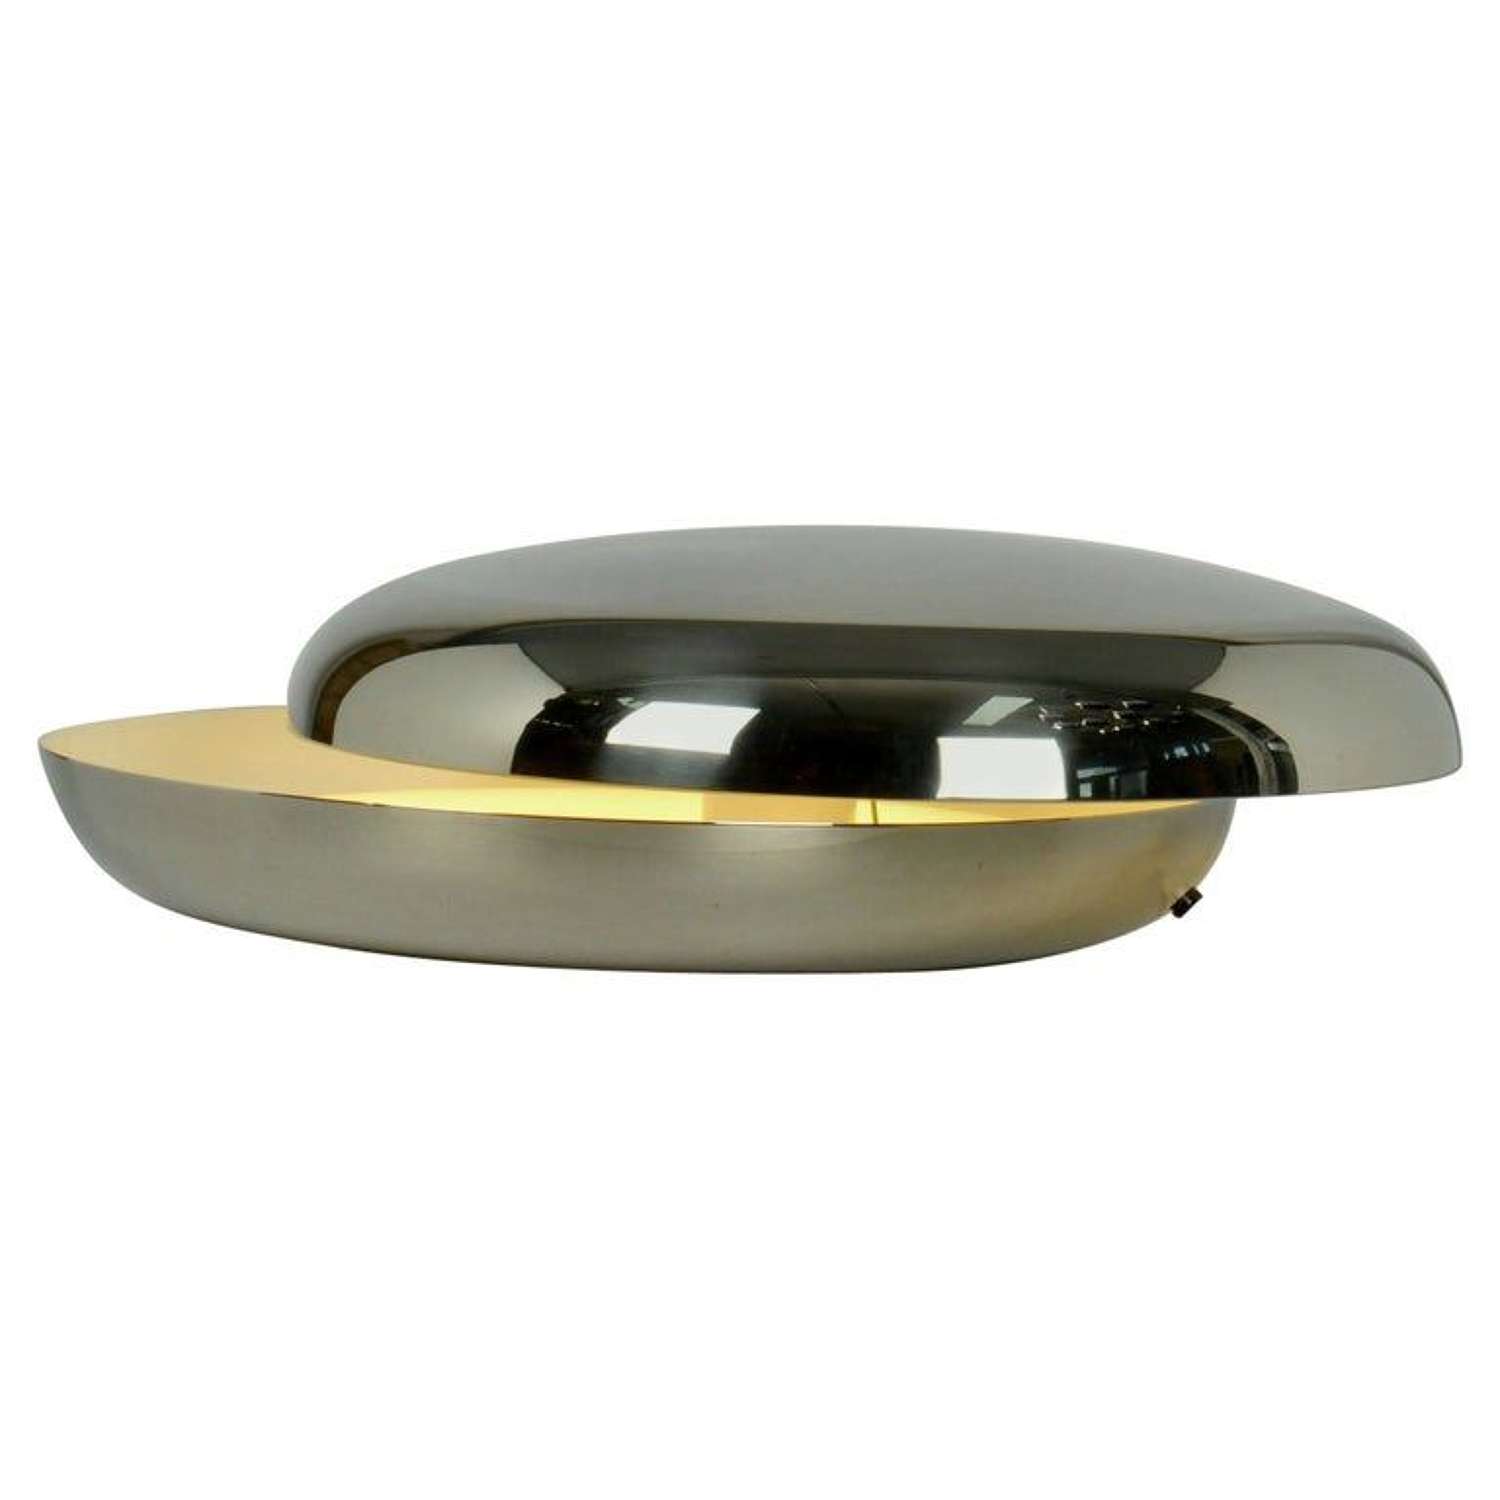 Minimalist Chrome Floor or Table Lamp Candle Loop, Wong Fontana Arte